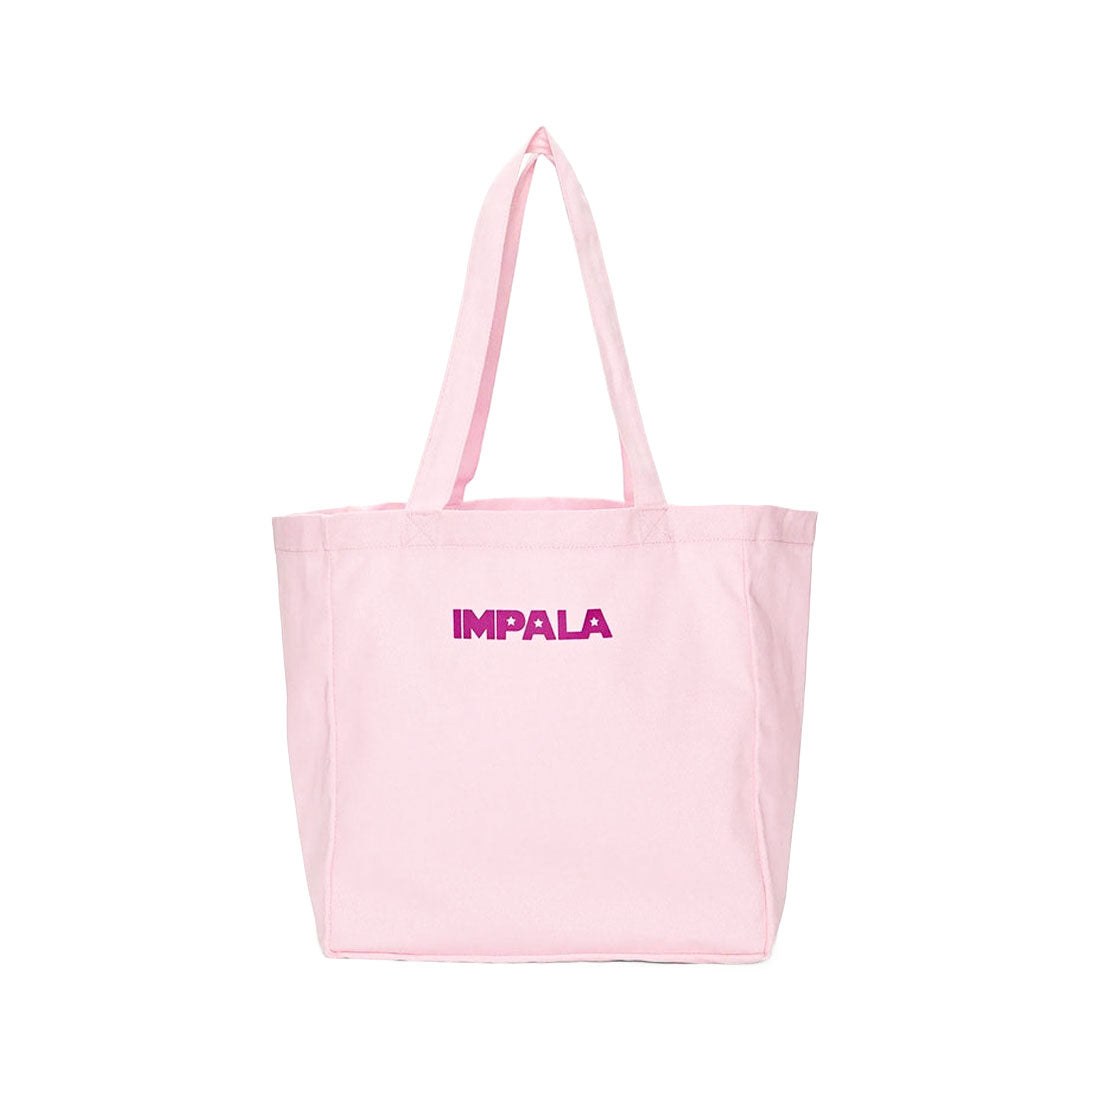 Impala Tote Bag - Pink Bags and Backpacks